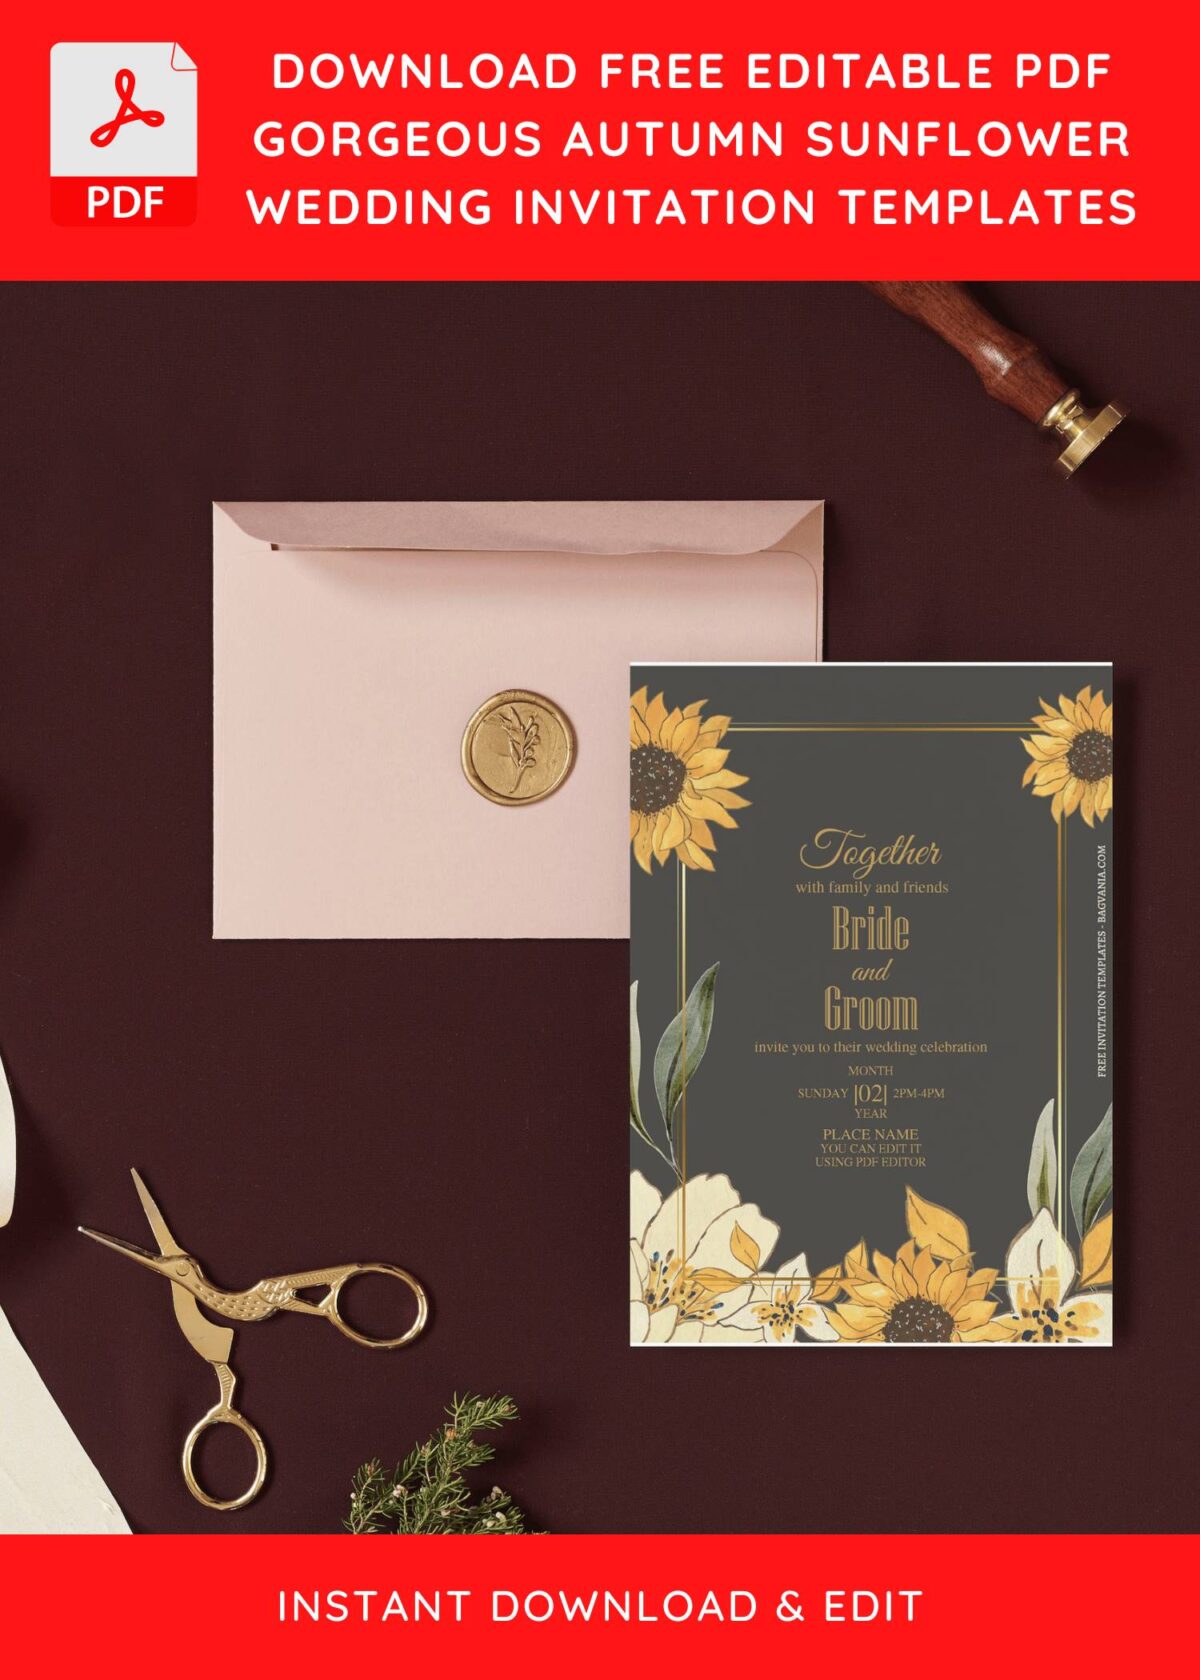 (Free Editable PDF) Simply Beautiful Autumn Floral Wedding Invitation Templates I